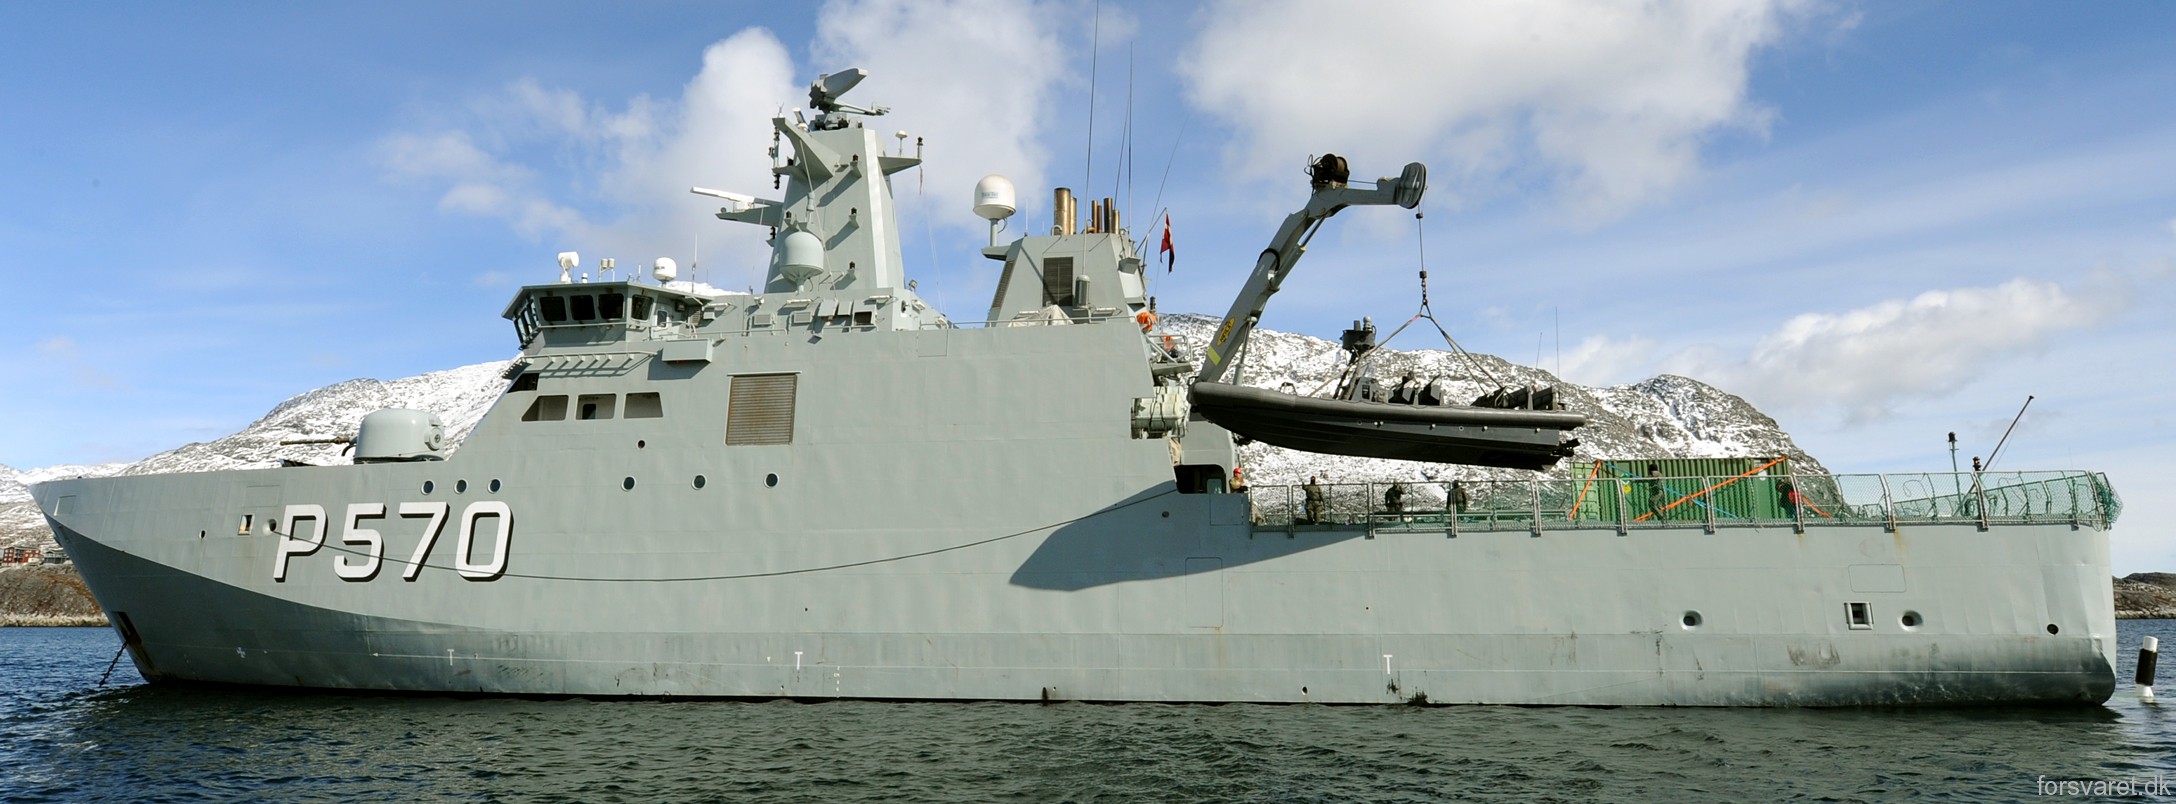 p-570 hdms knud rasmussen class offshore patrol vessel royal danish navy inspektionsfartøj 07